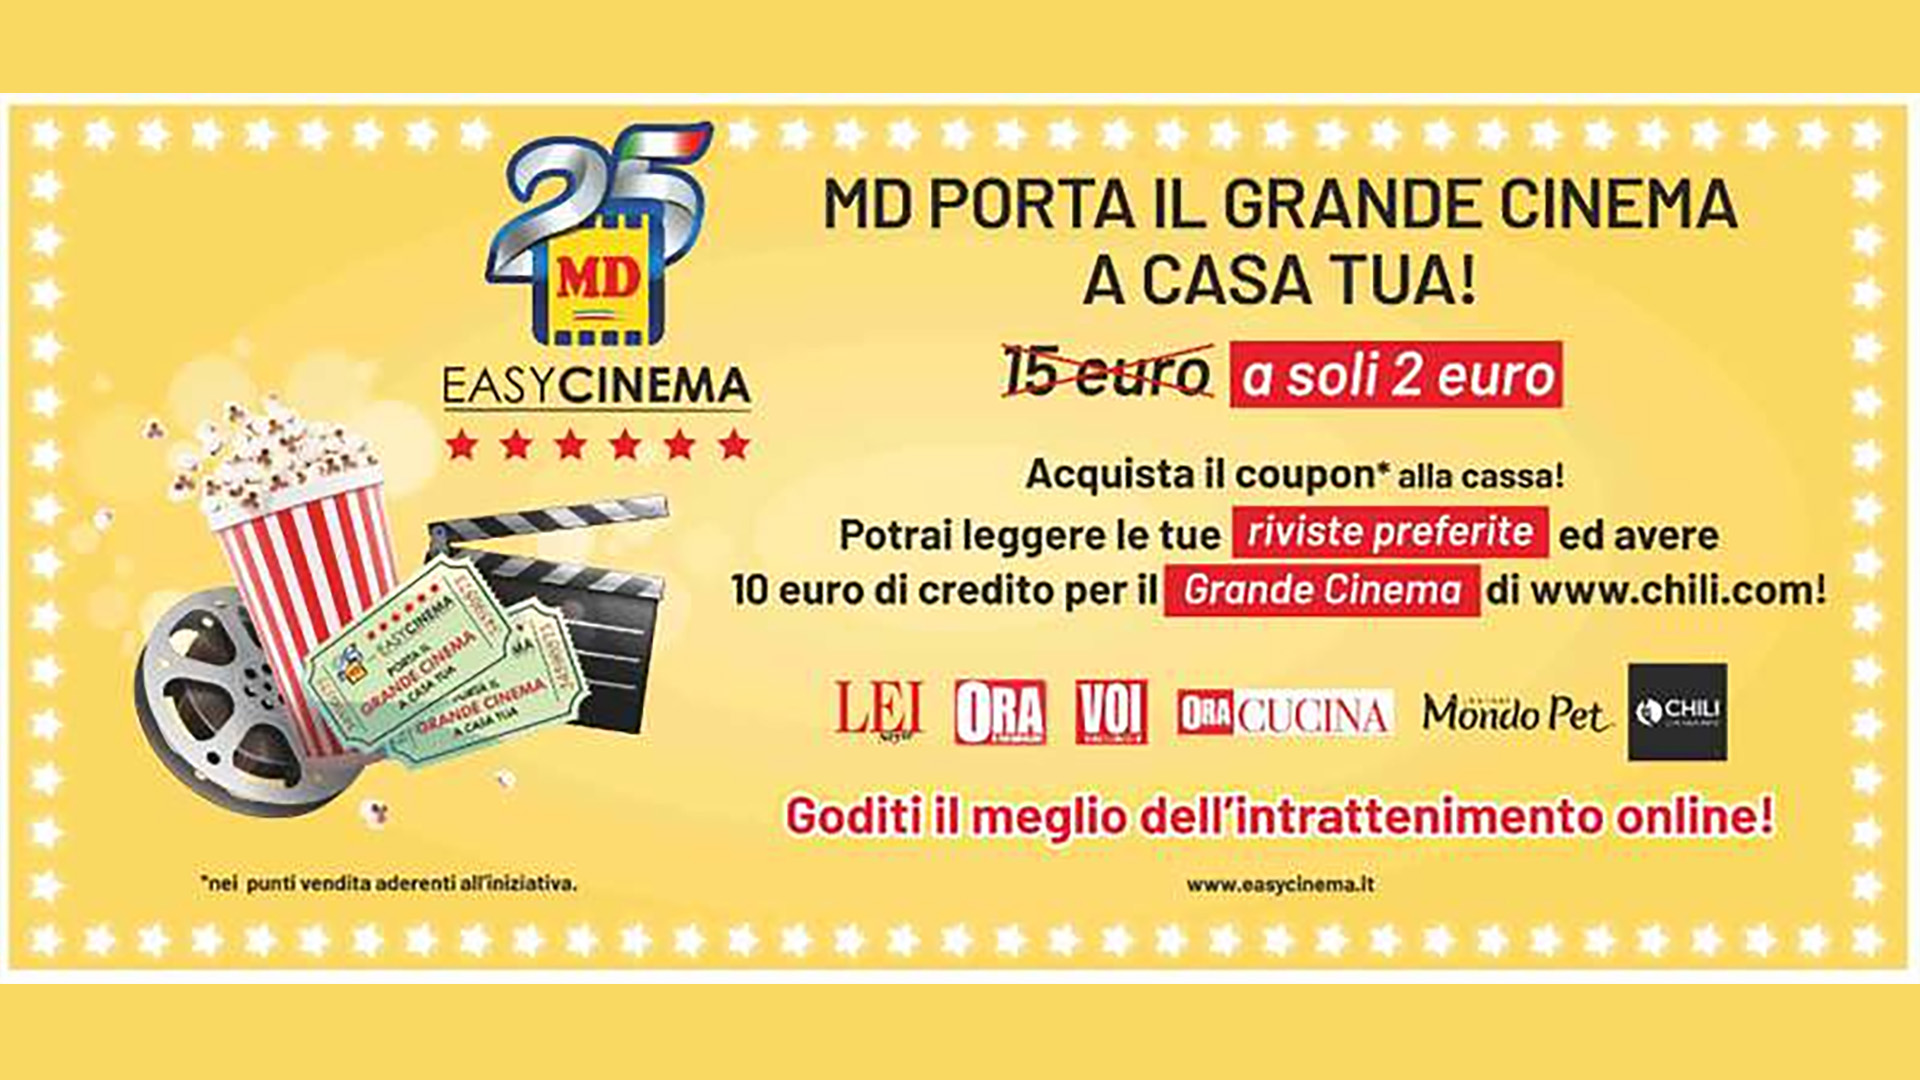 Easy cinema md - Eccellenze Italiane TV